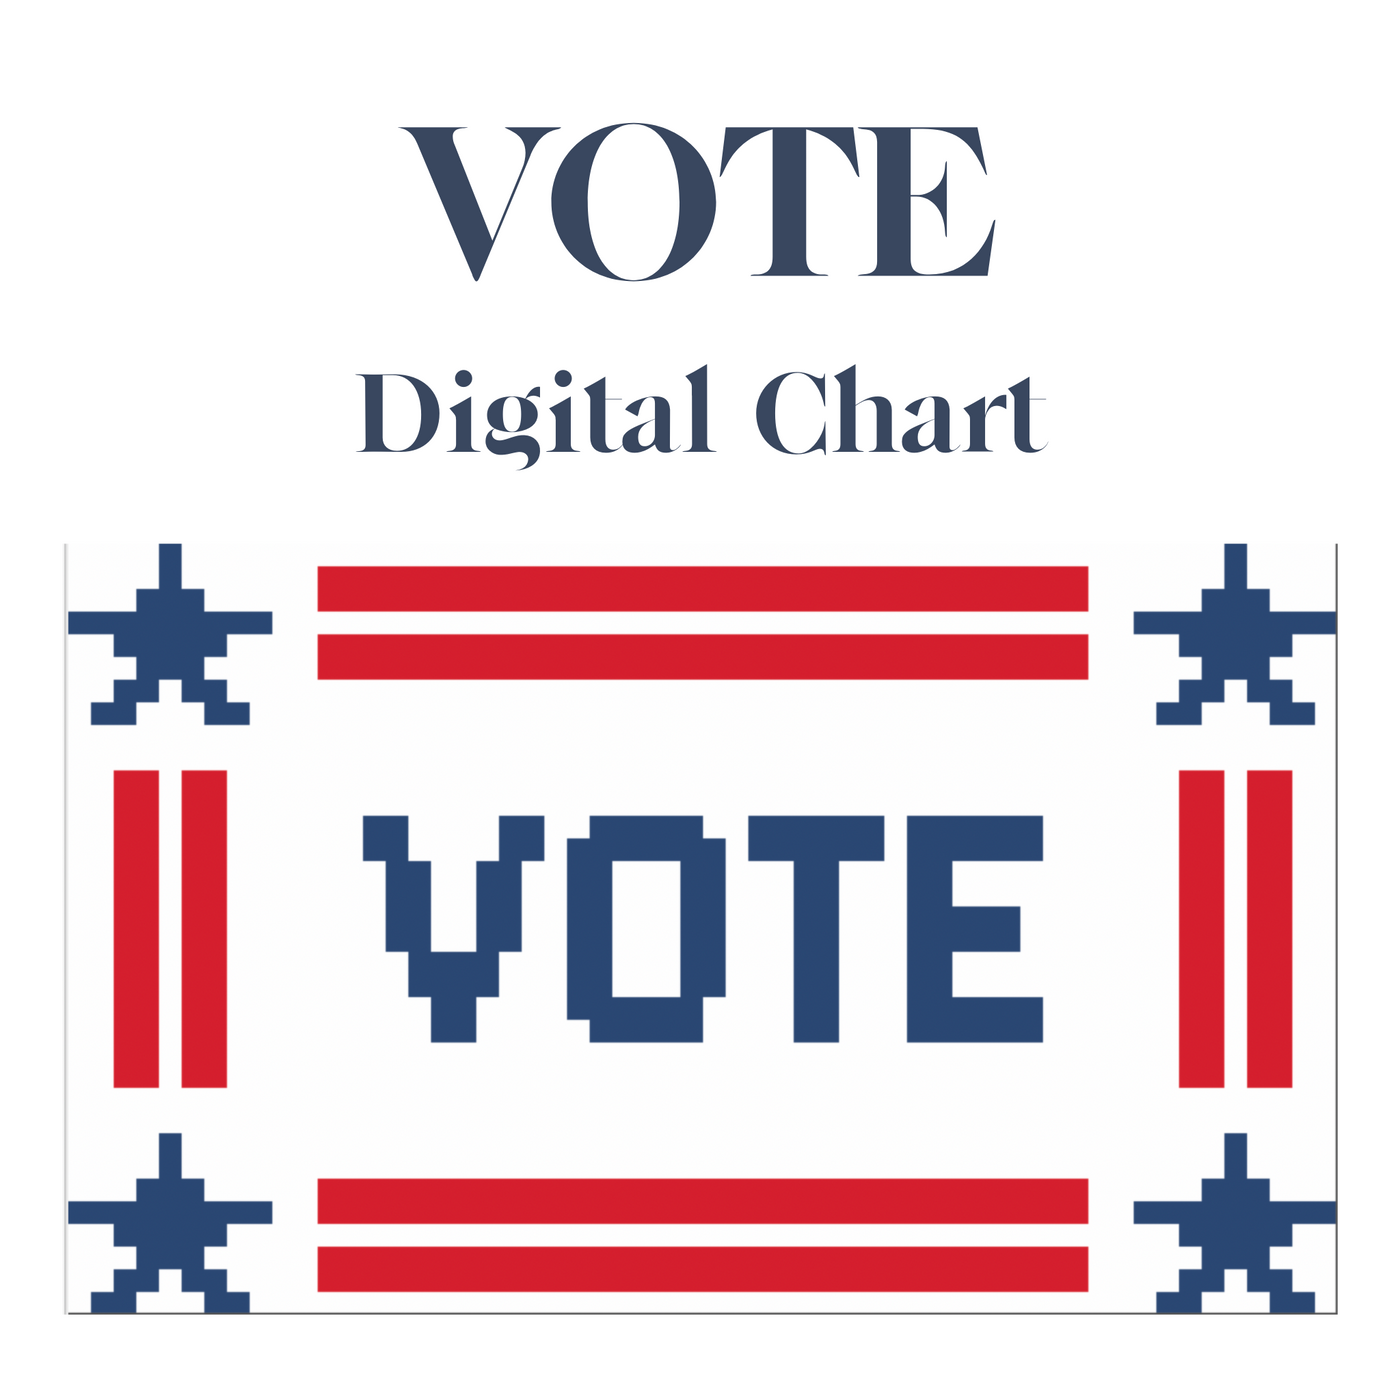 VOTE Digital Chart